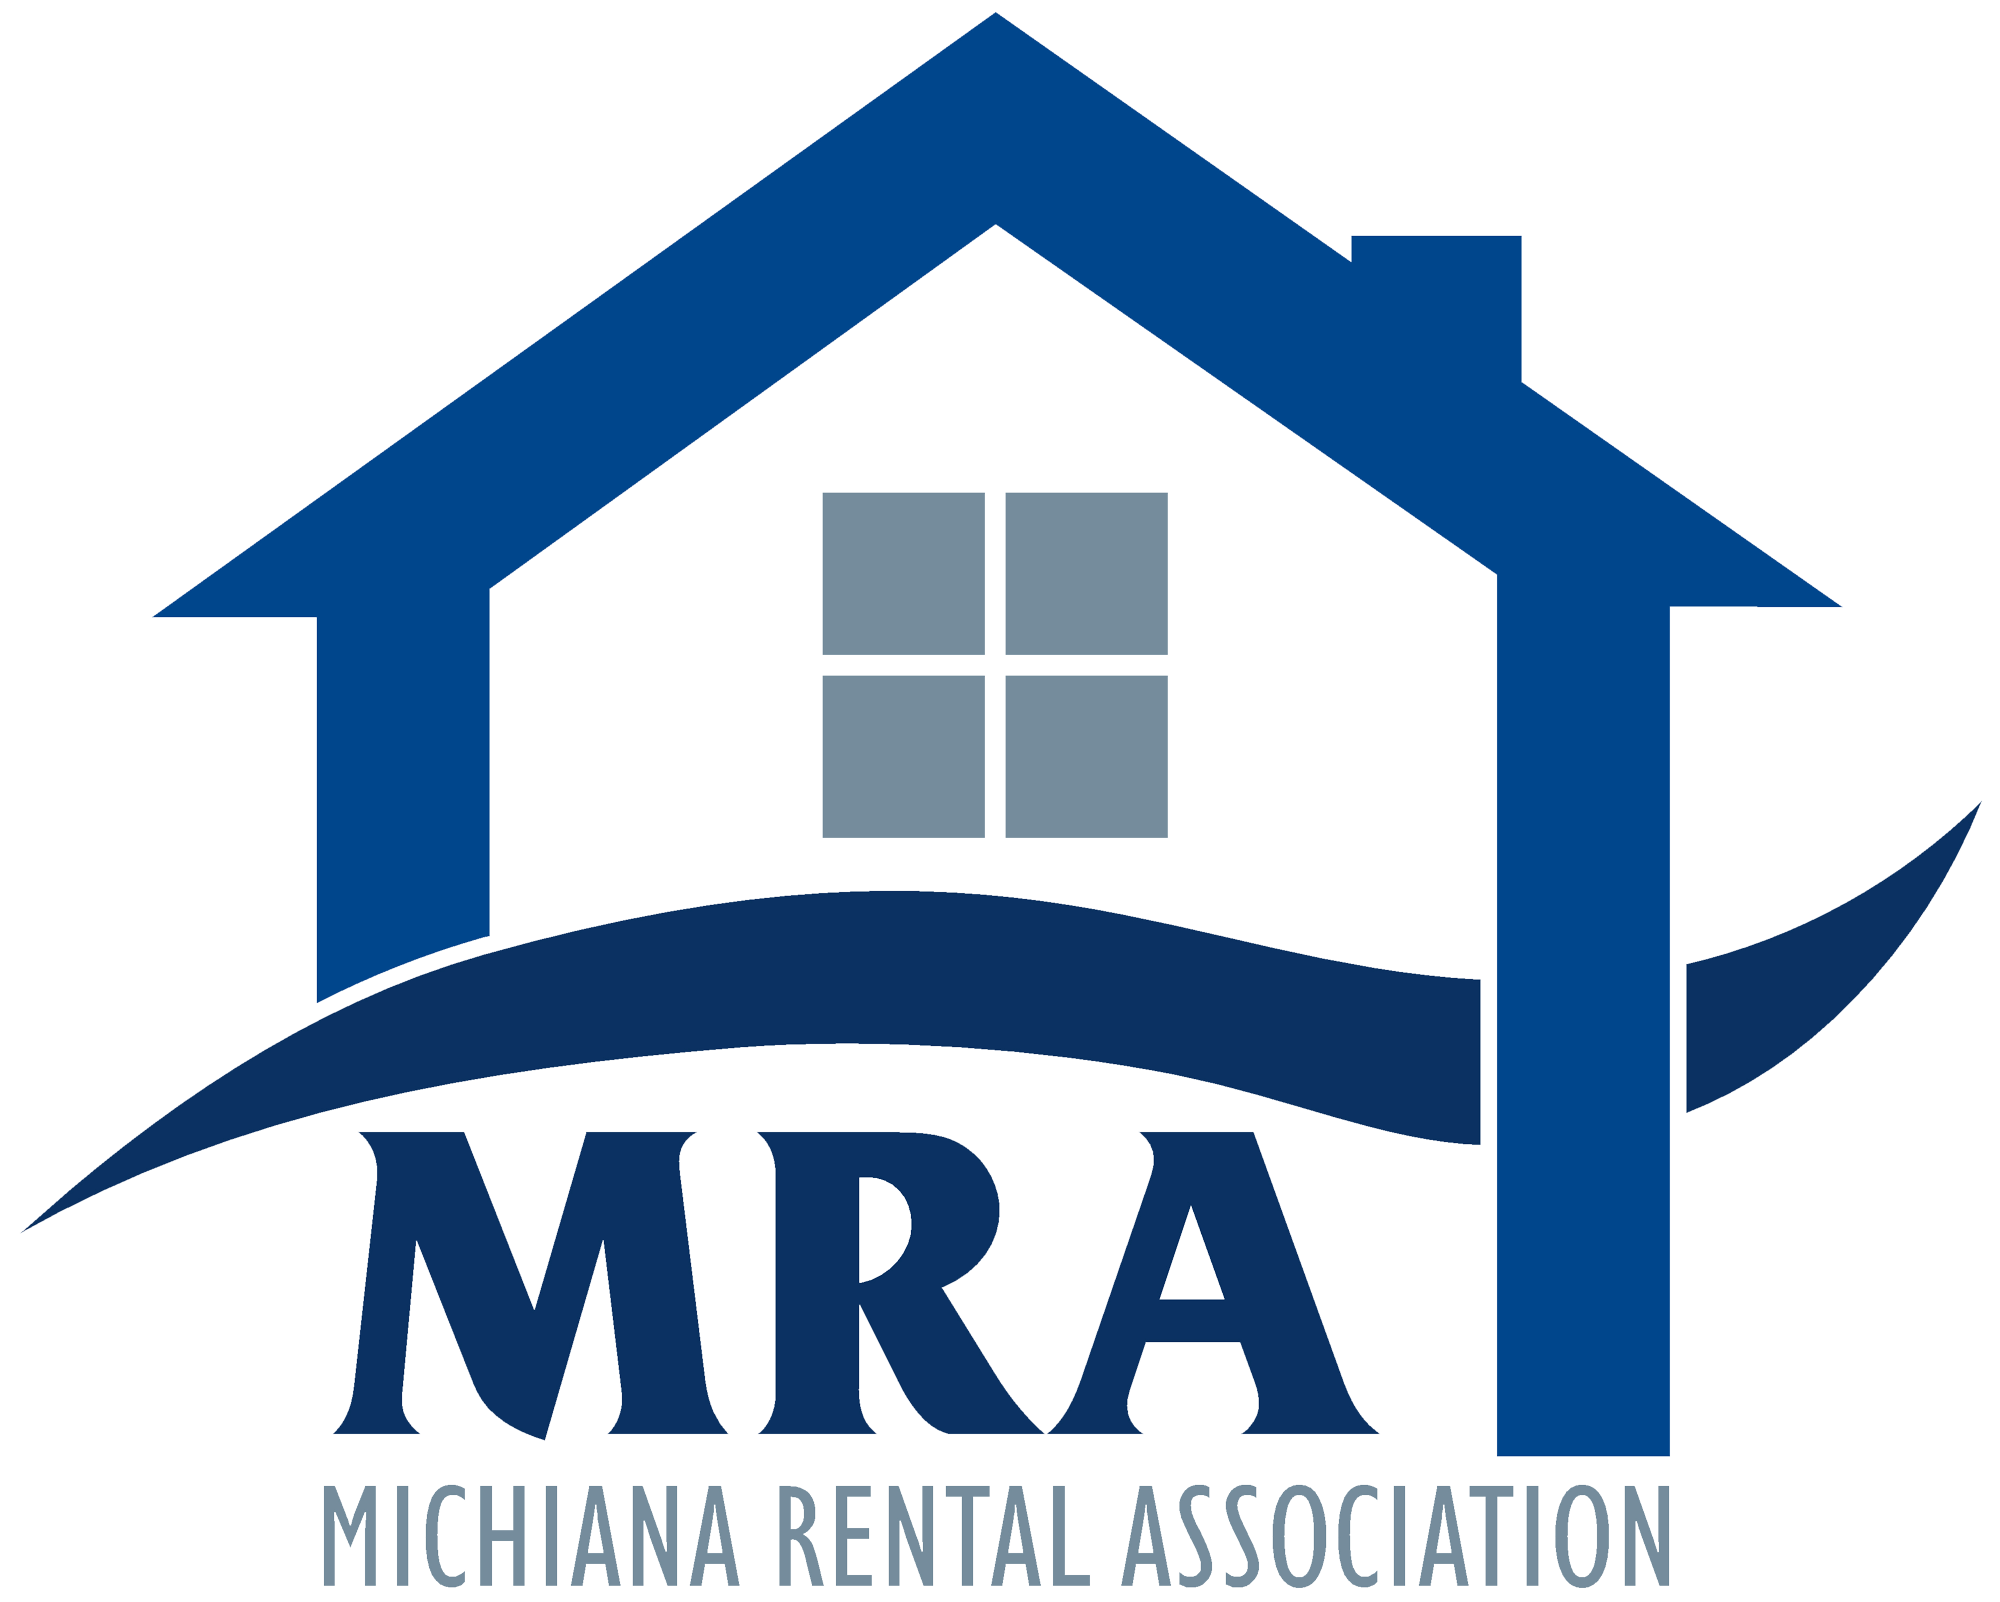 Michiana Rental Association